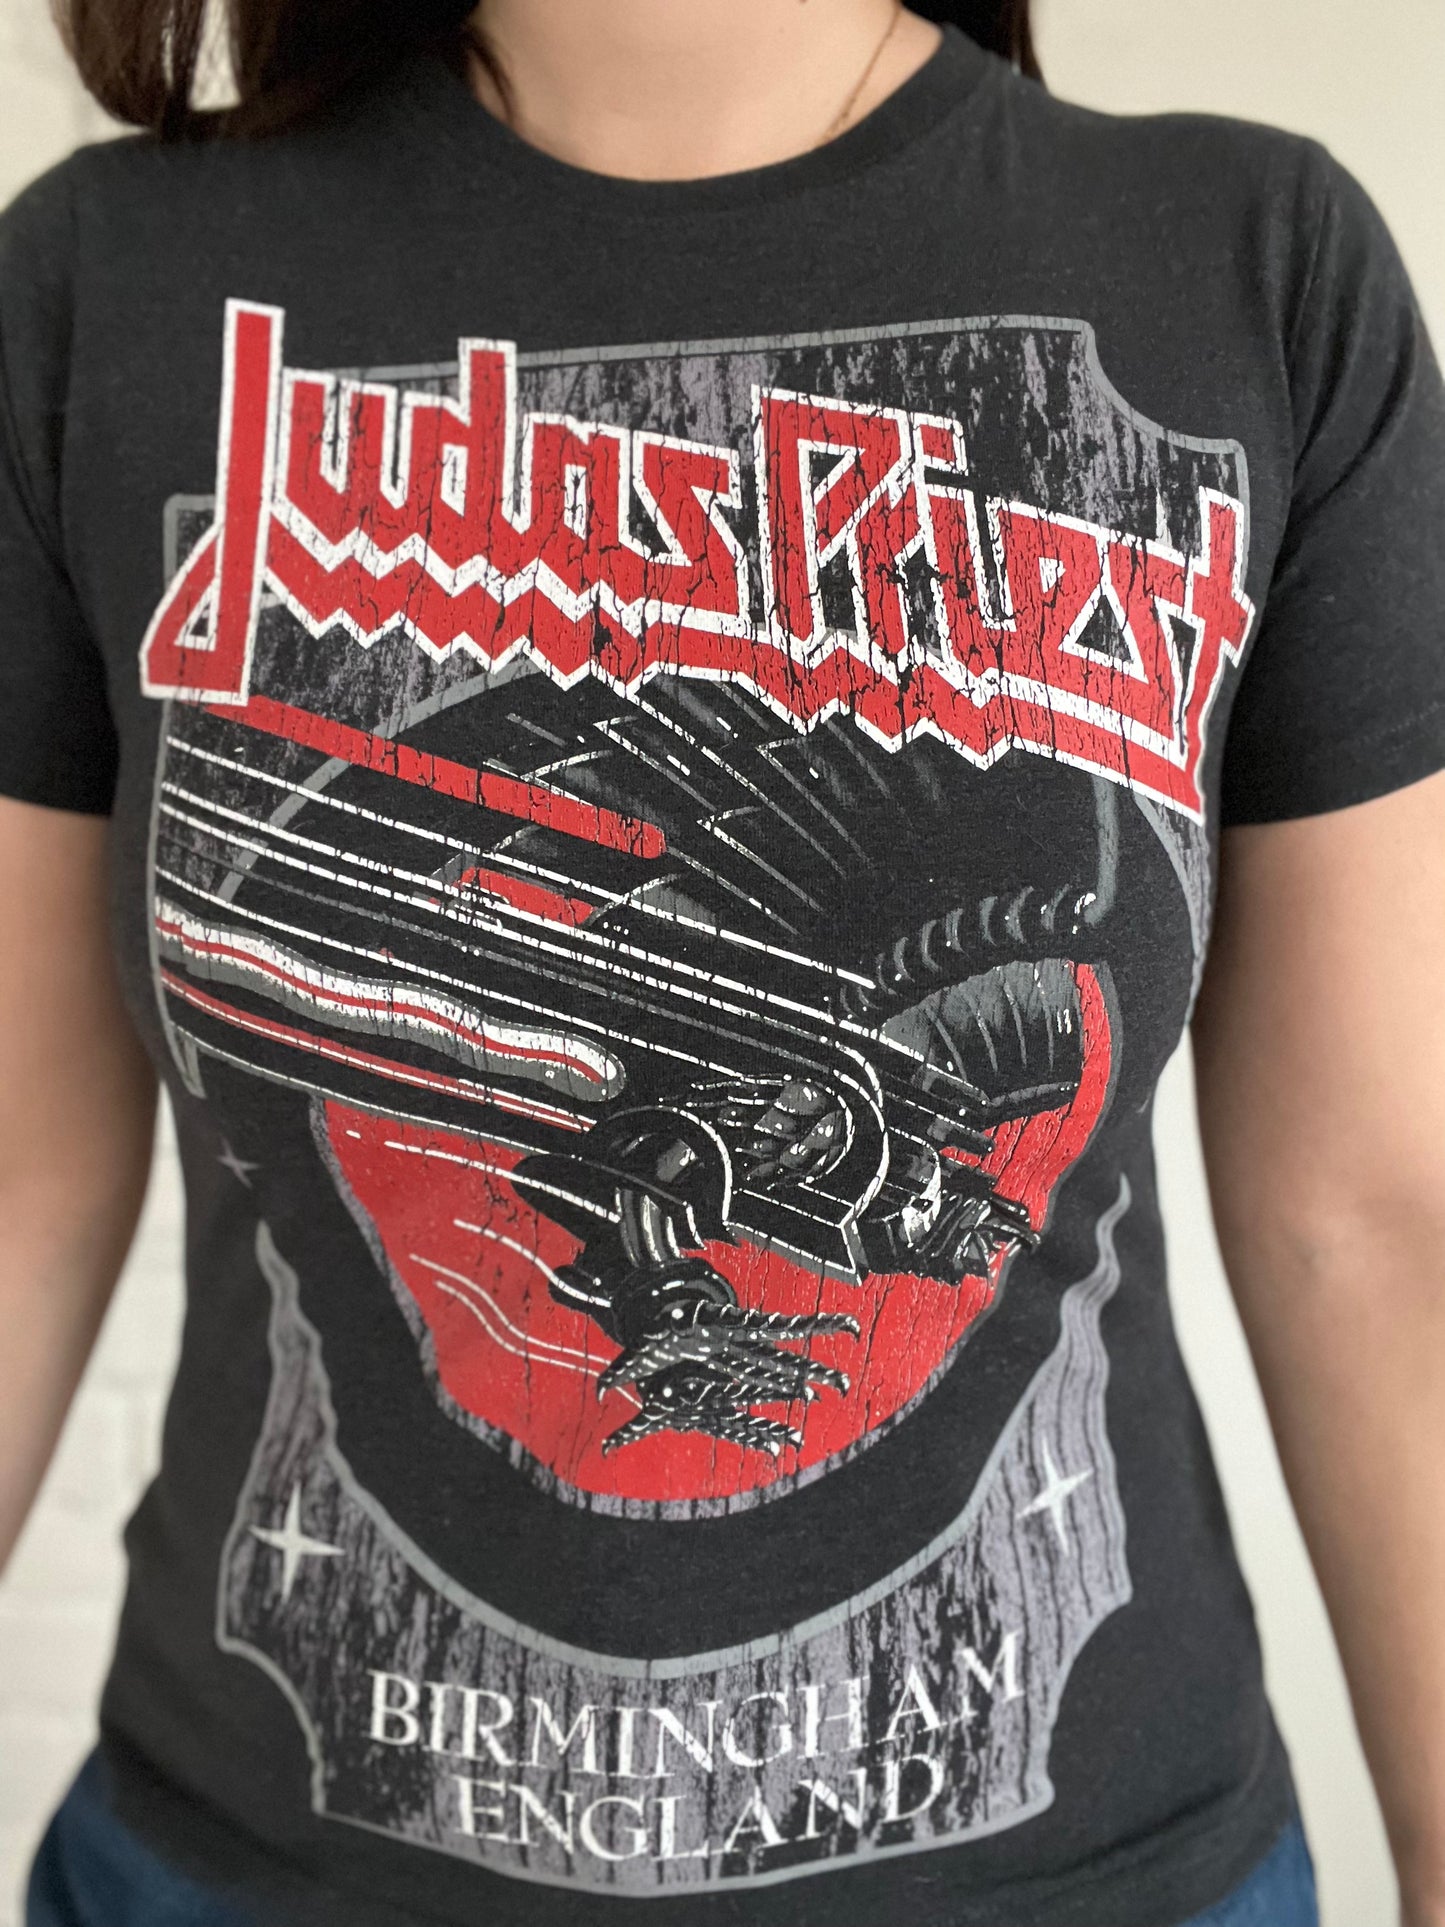 Judas Priest Birmingham England T-shirt - S